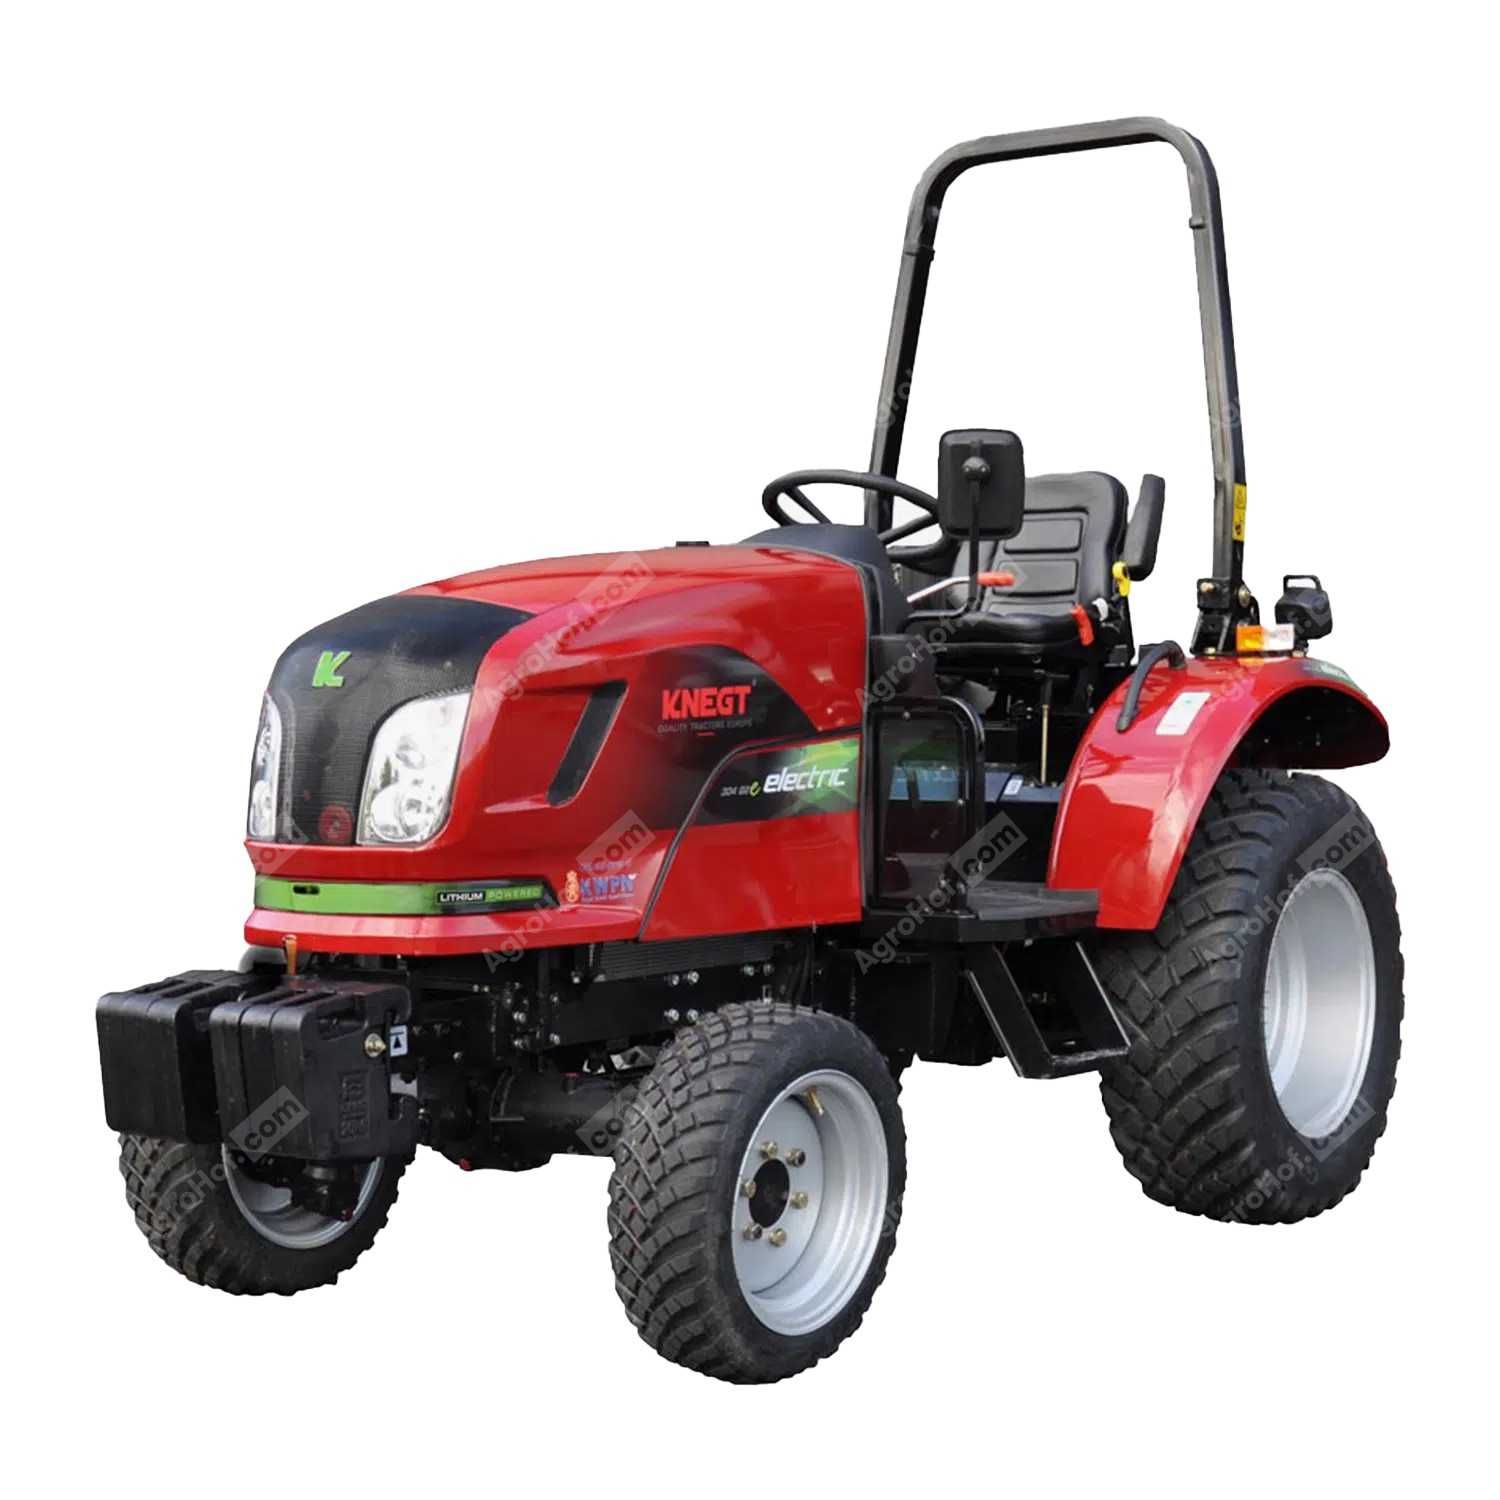 Tractor electric 45-55 CP / Knegt304G2E - 404G2E